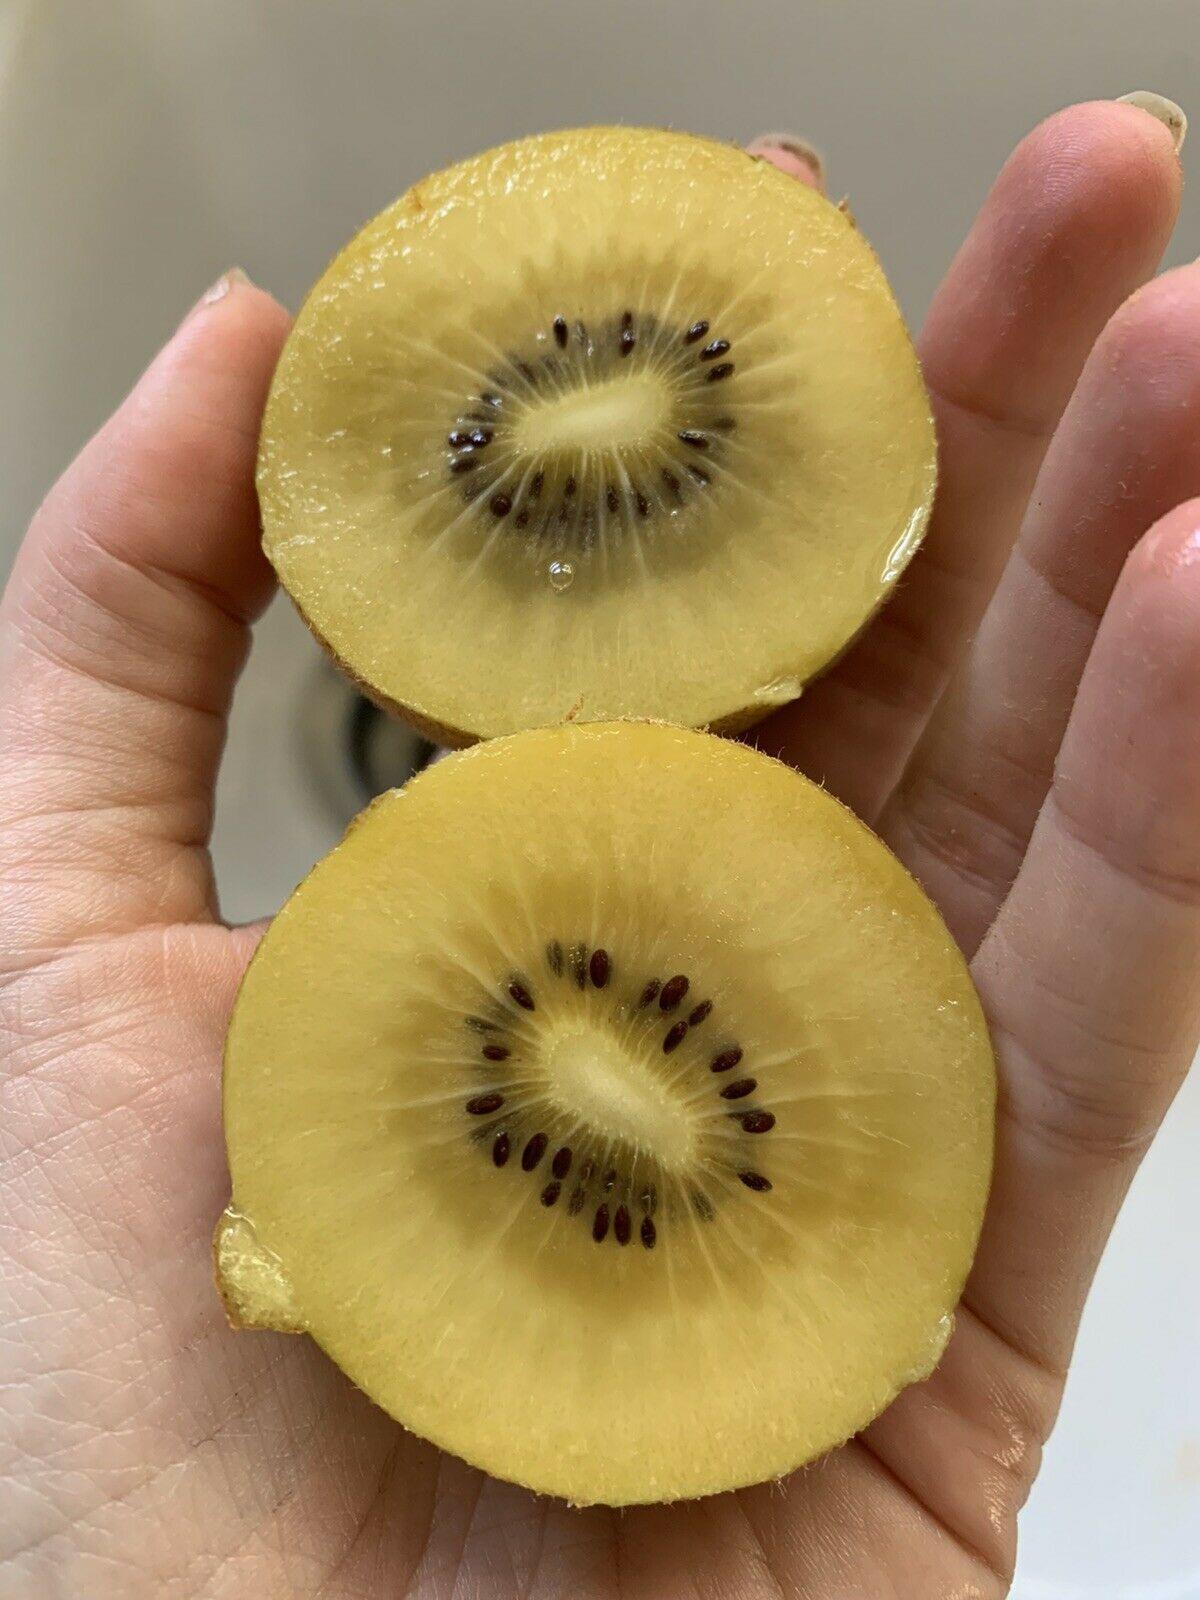 50 Golden Kiwi Fruit Seeds